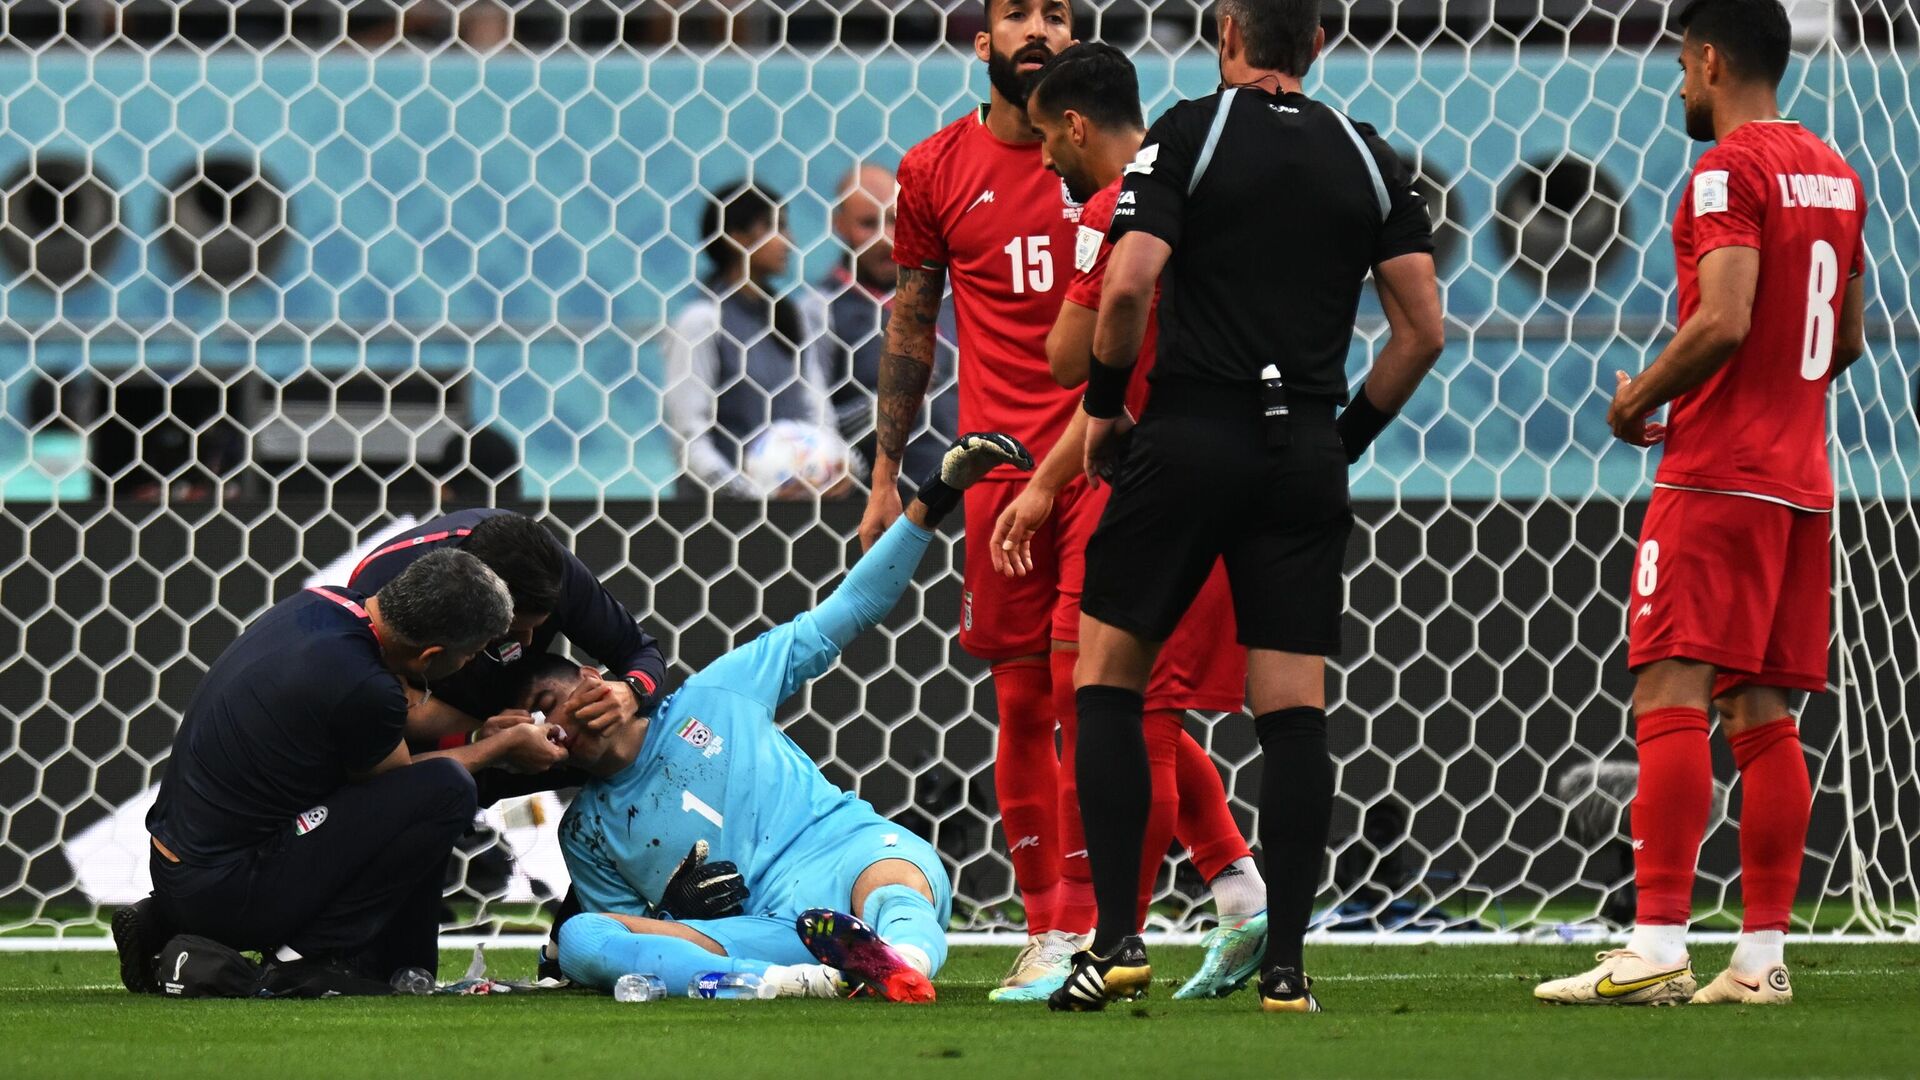 В матче Англии с Ираном установлено два рекорда чемпионатов мира по футболу